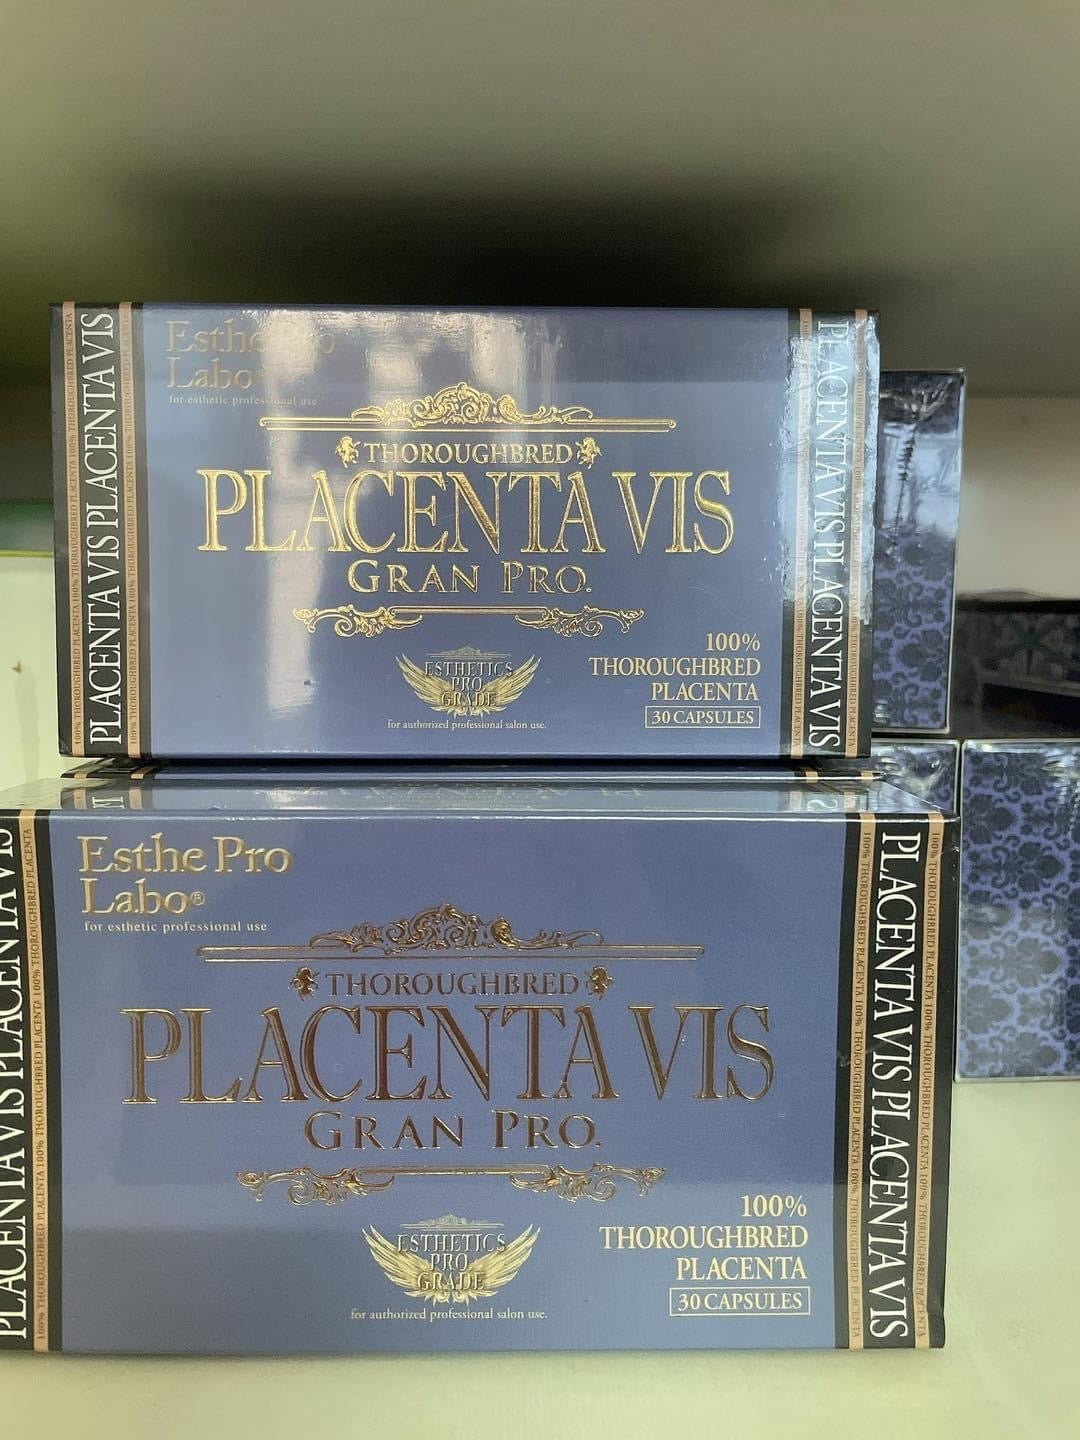 Vien uong Placentavis